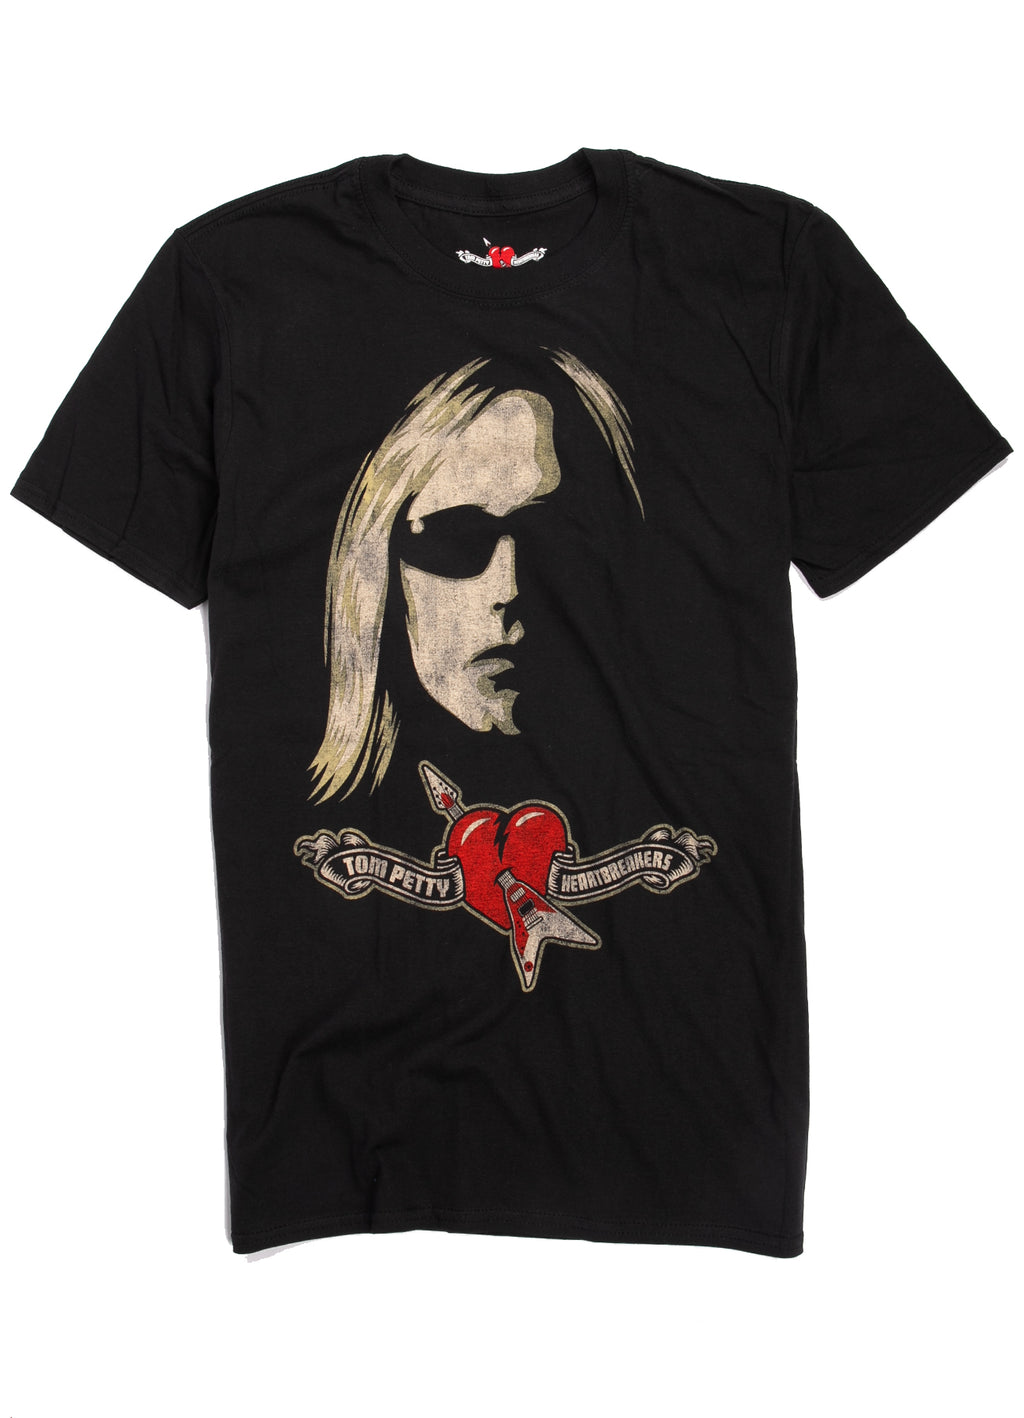 Tom Petty & the Heartbreakers t-shirt.